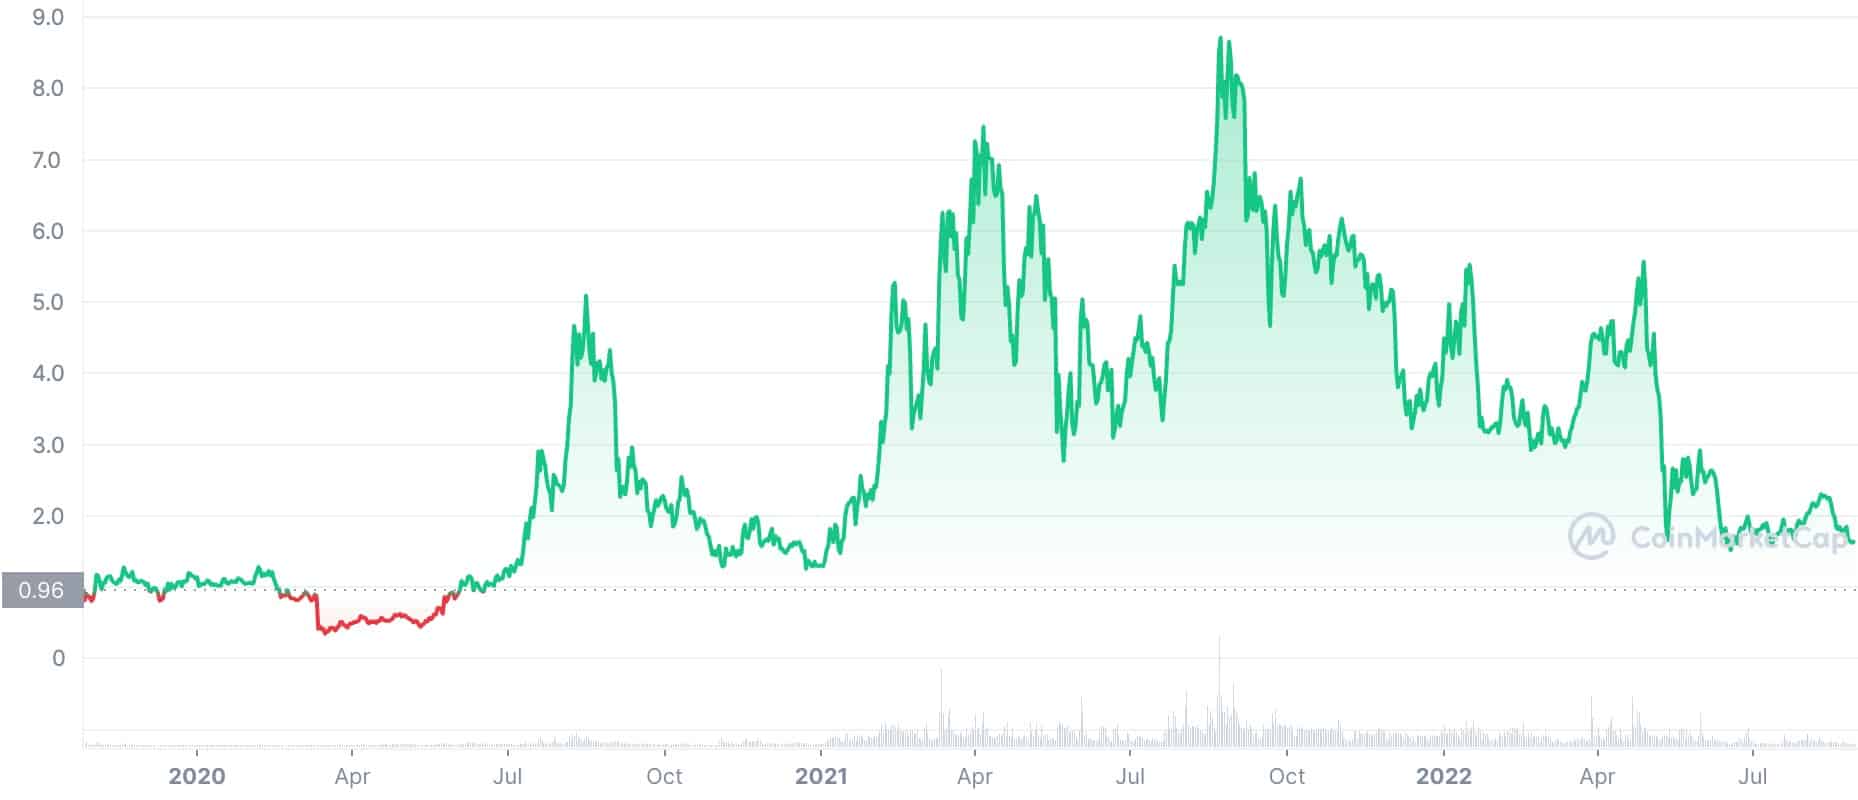 kava crypto price prediction 2030